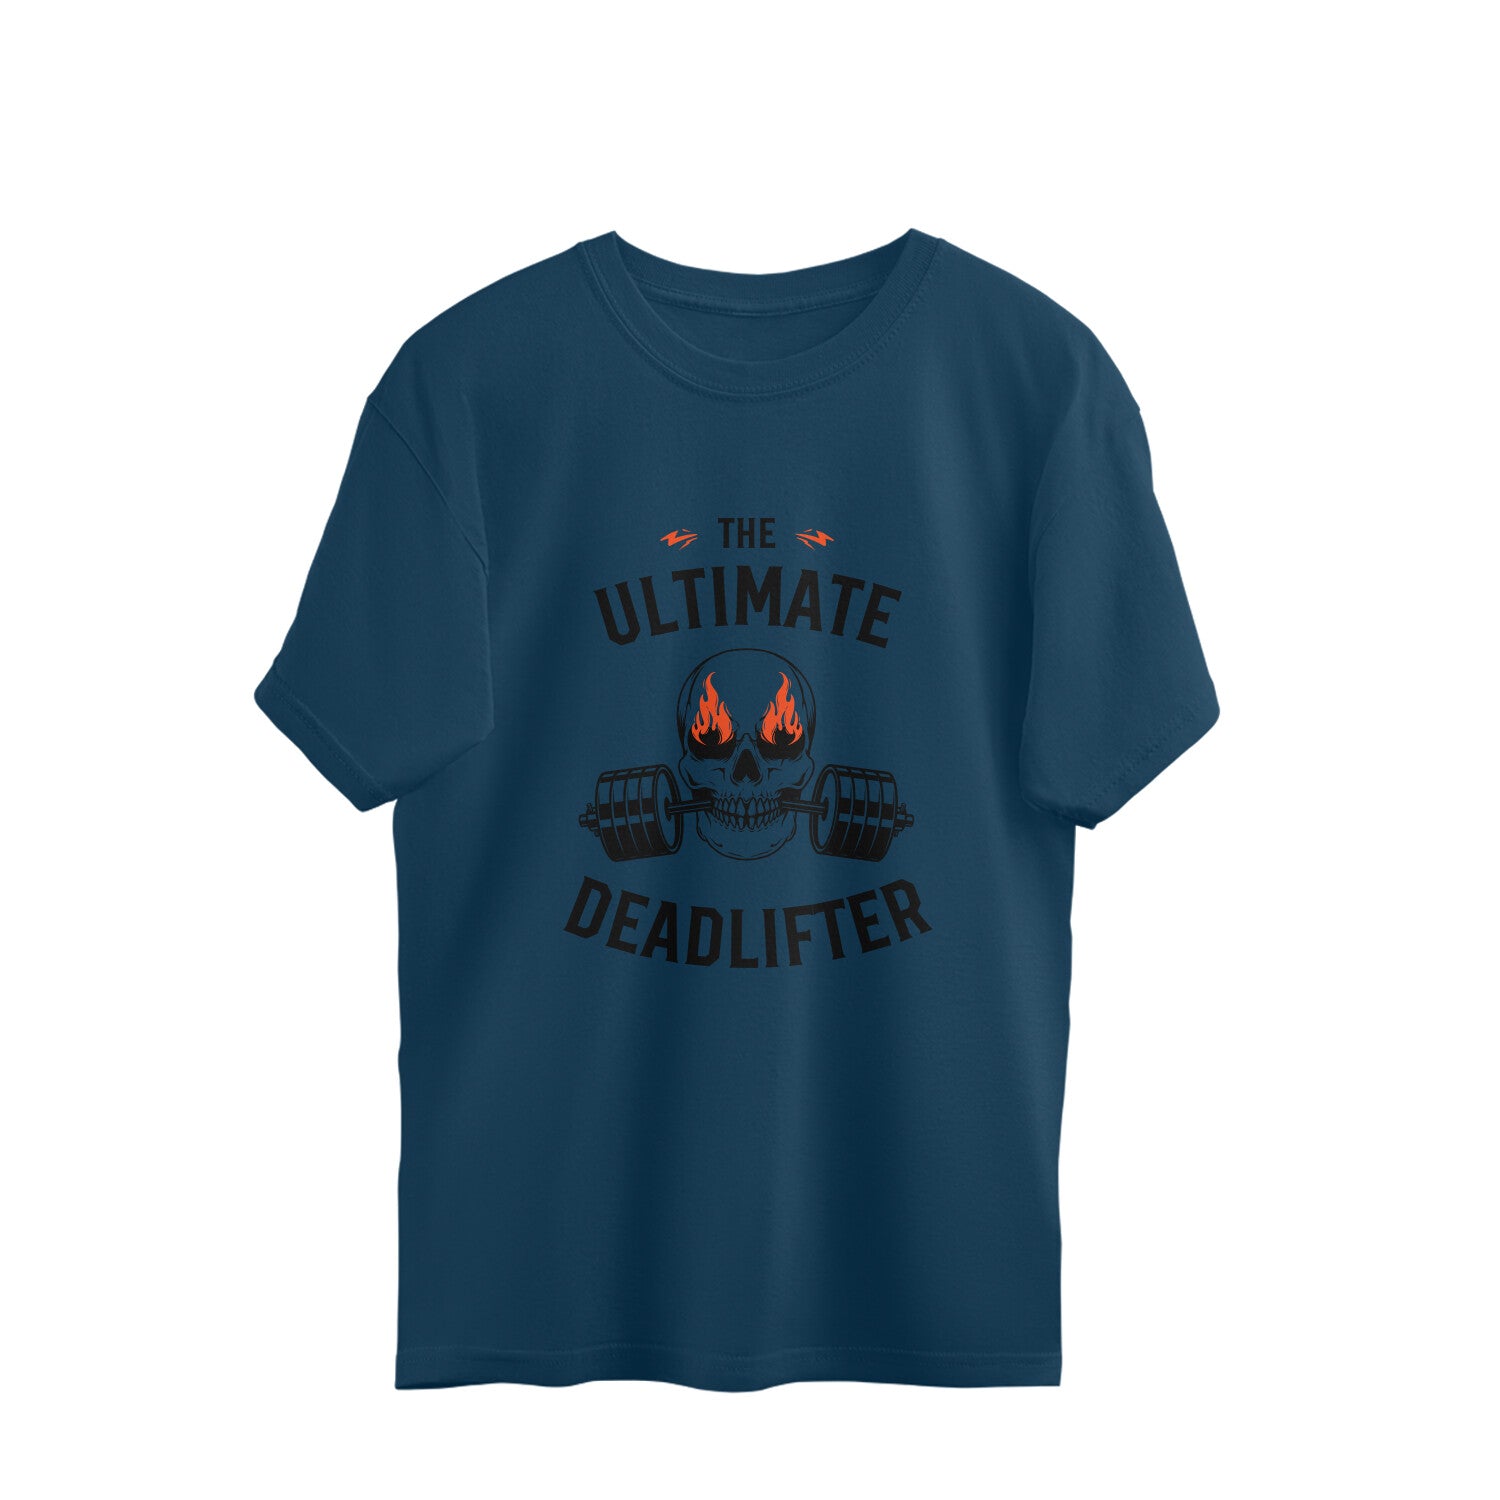 The Ultimate Deadlifter oversized T shirt